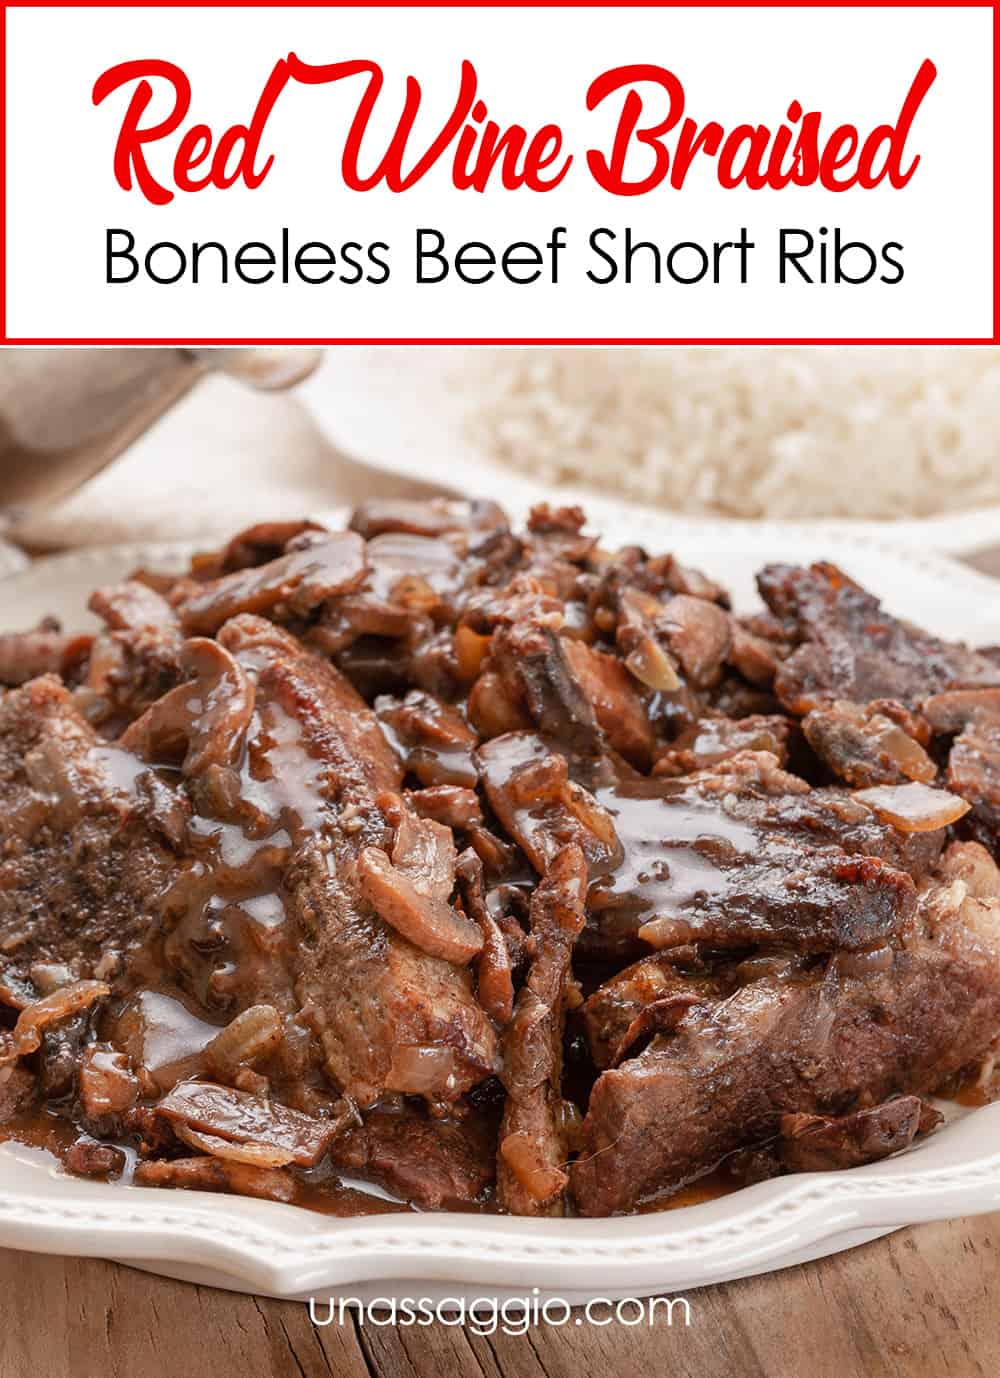 Red Wine Braised Boneless Beef Short Ribs